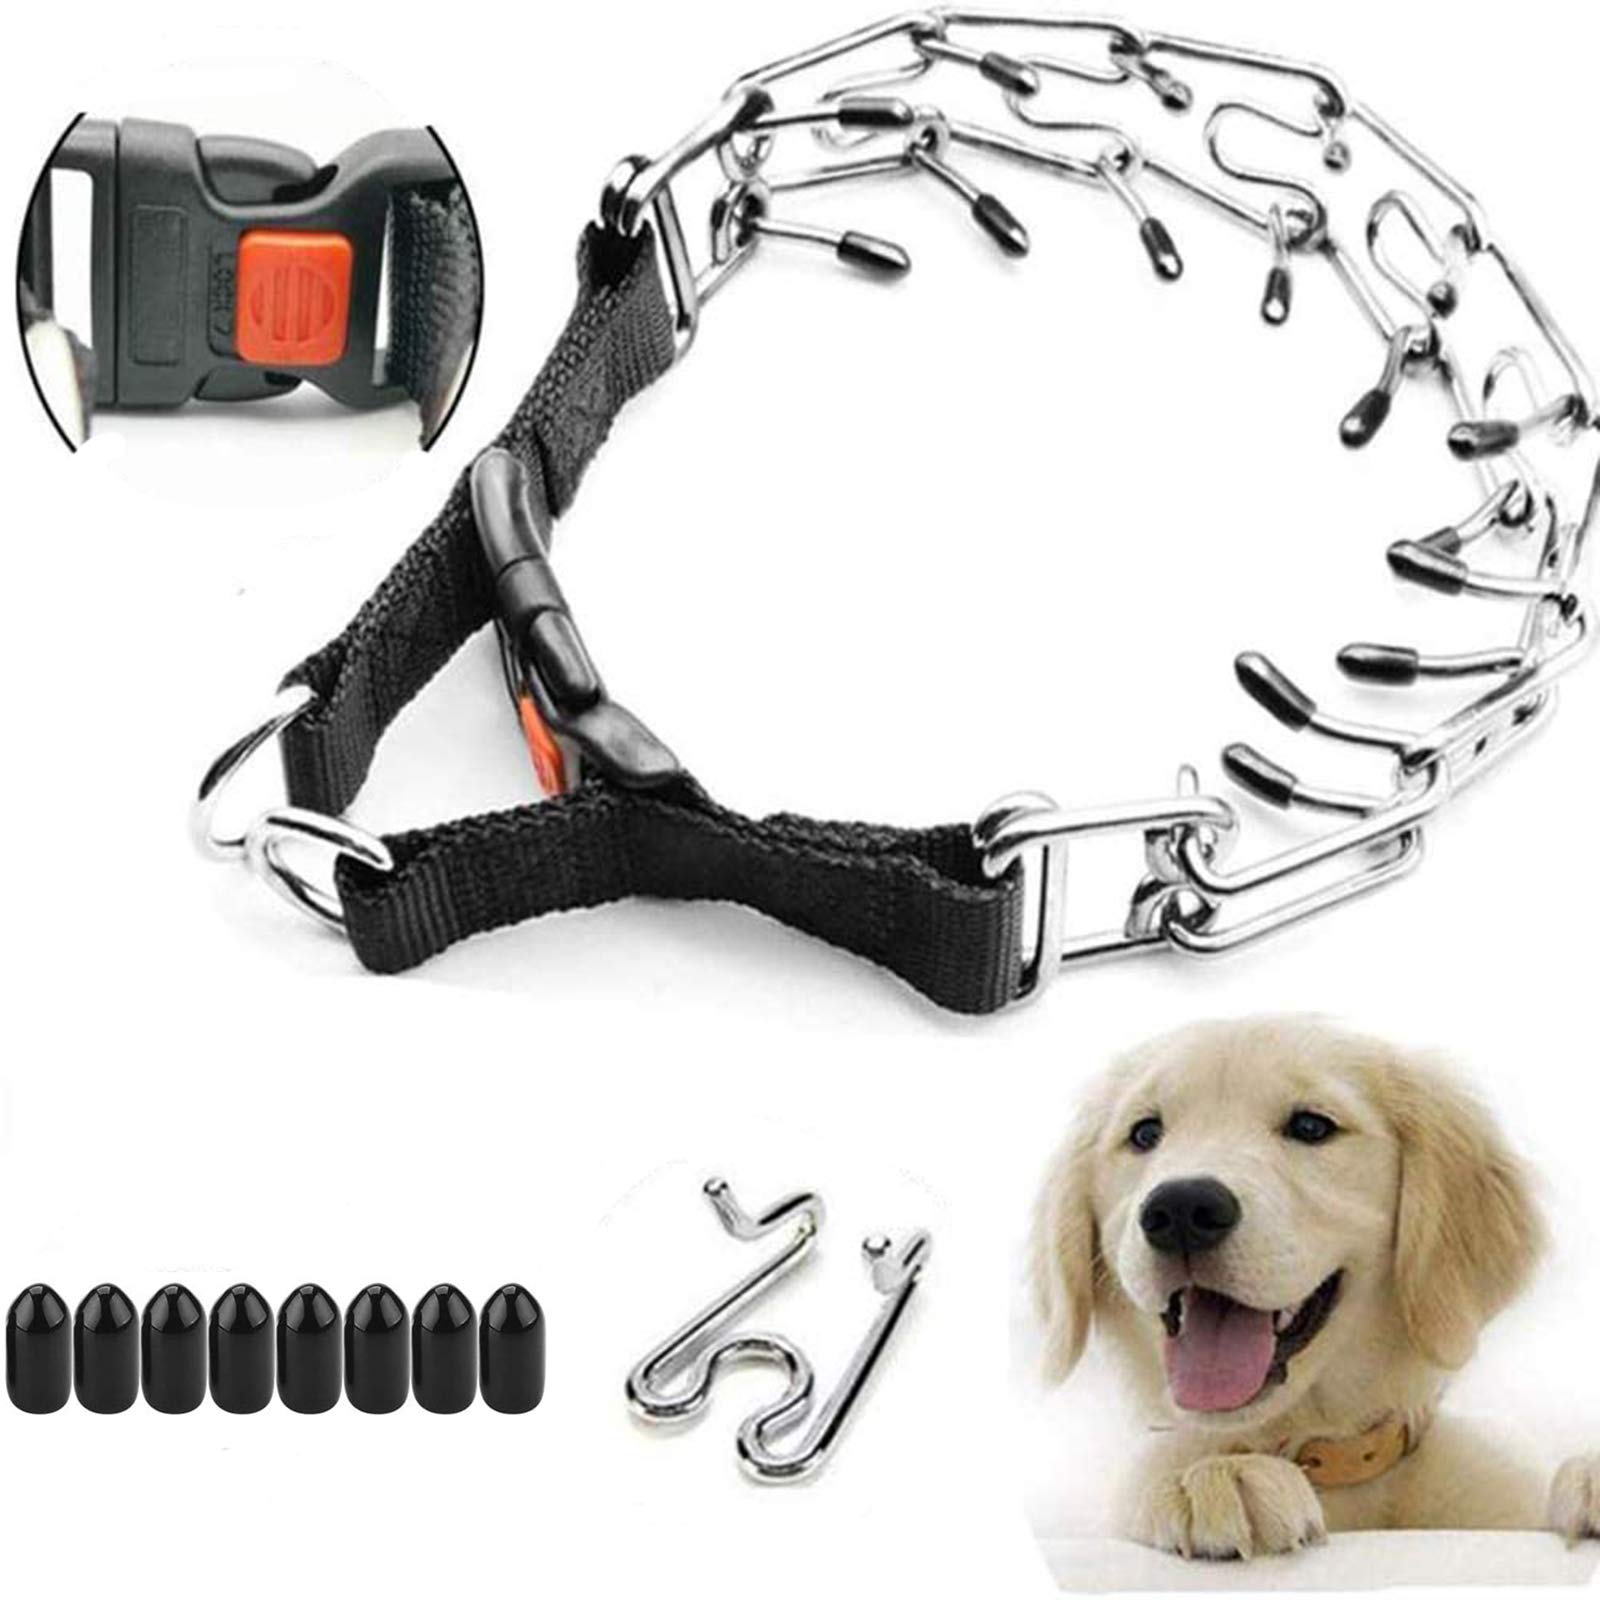 Supet Dog Prong Collar, Adjustable Dog Training Collar with Buckle